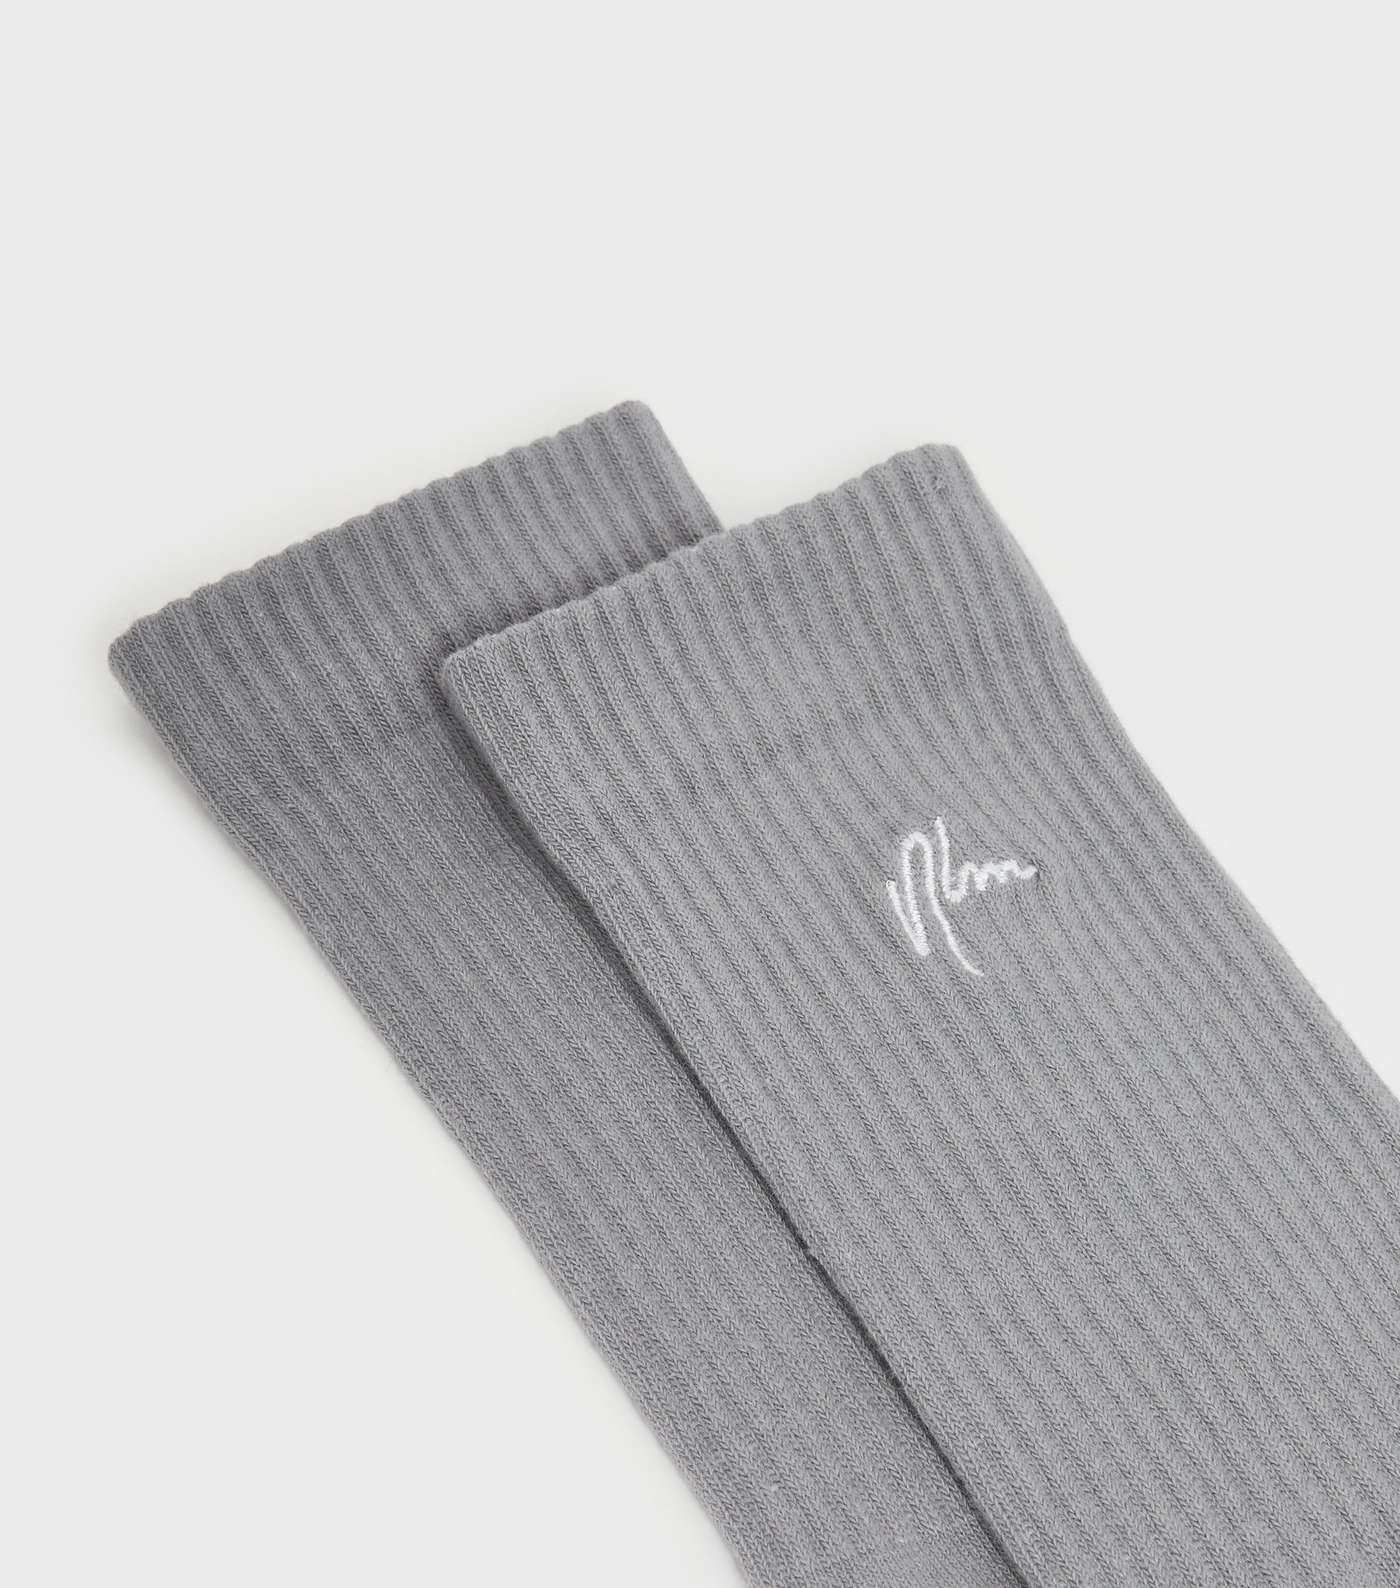 Pale Grey Ribbed NLM Embroidered Socks Image 2